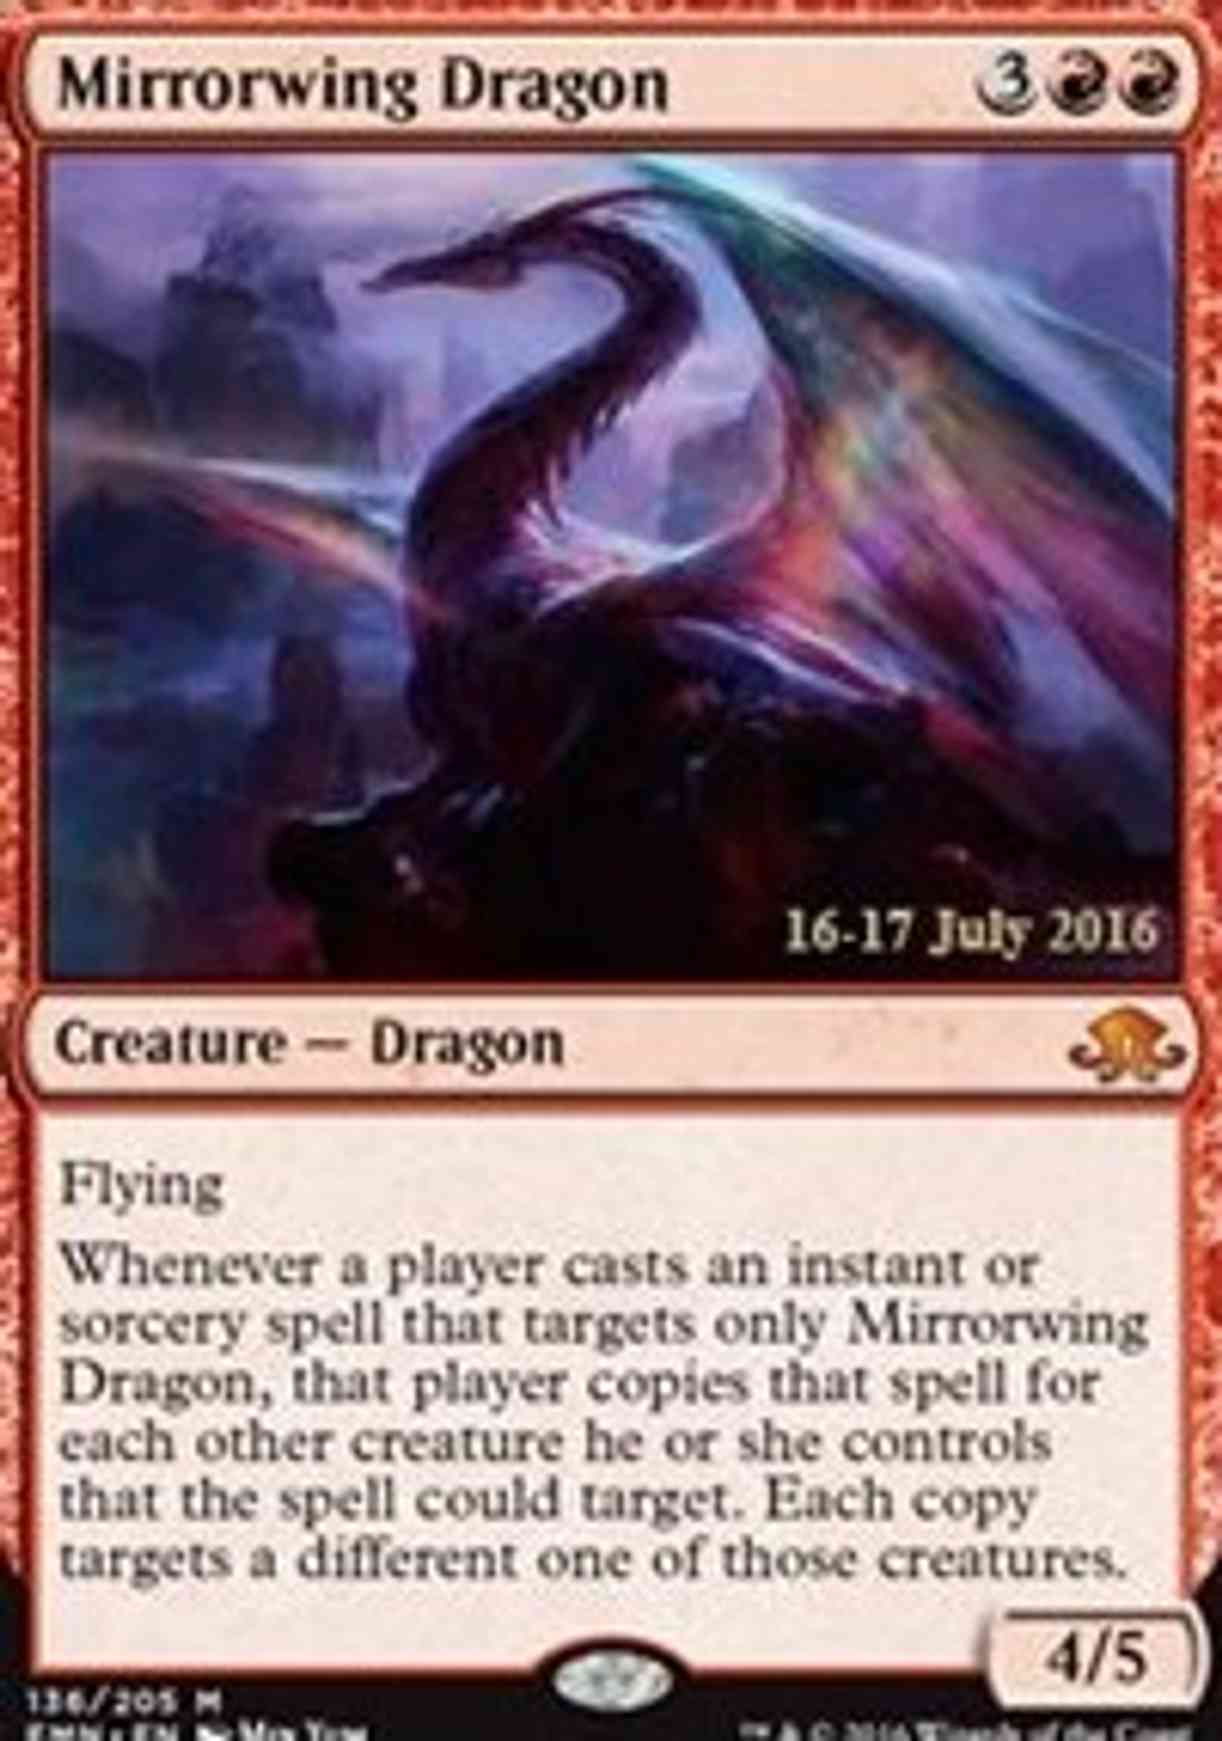 Mirrorwing Dragon magic card front